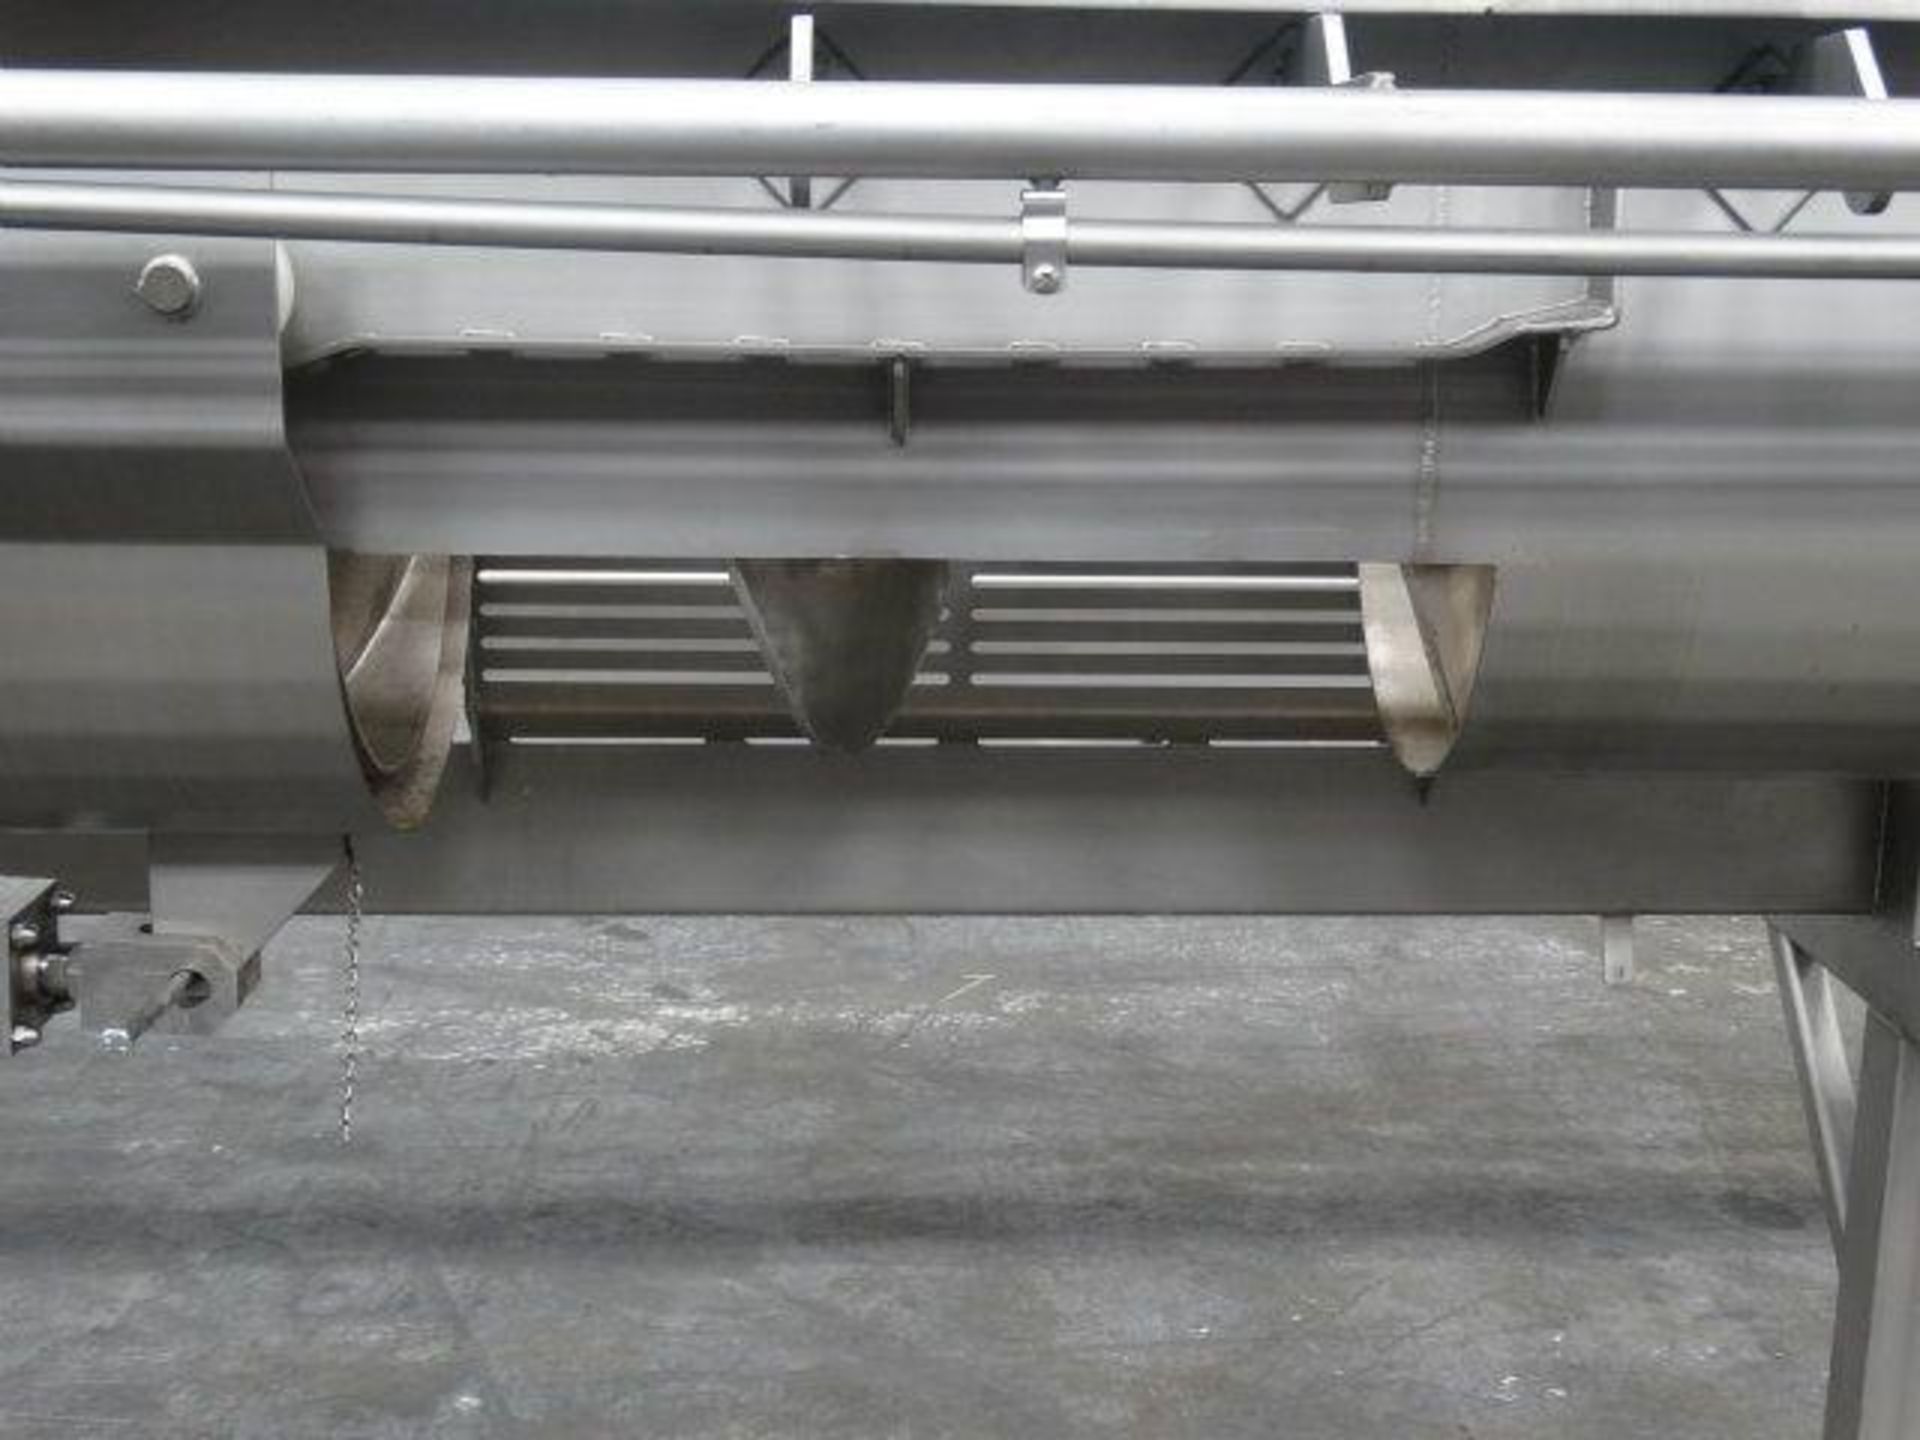 Friesen SS auger screw conveyor {Pendleton, IN} - Image 31 of 39